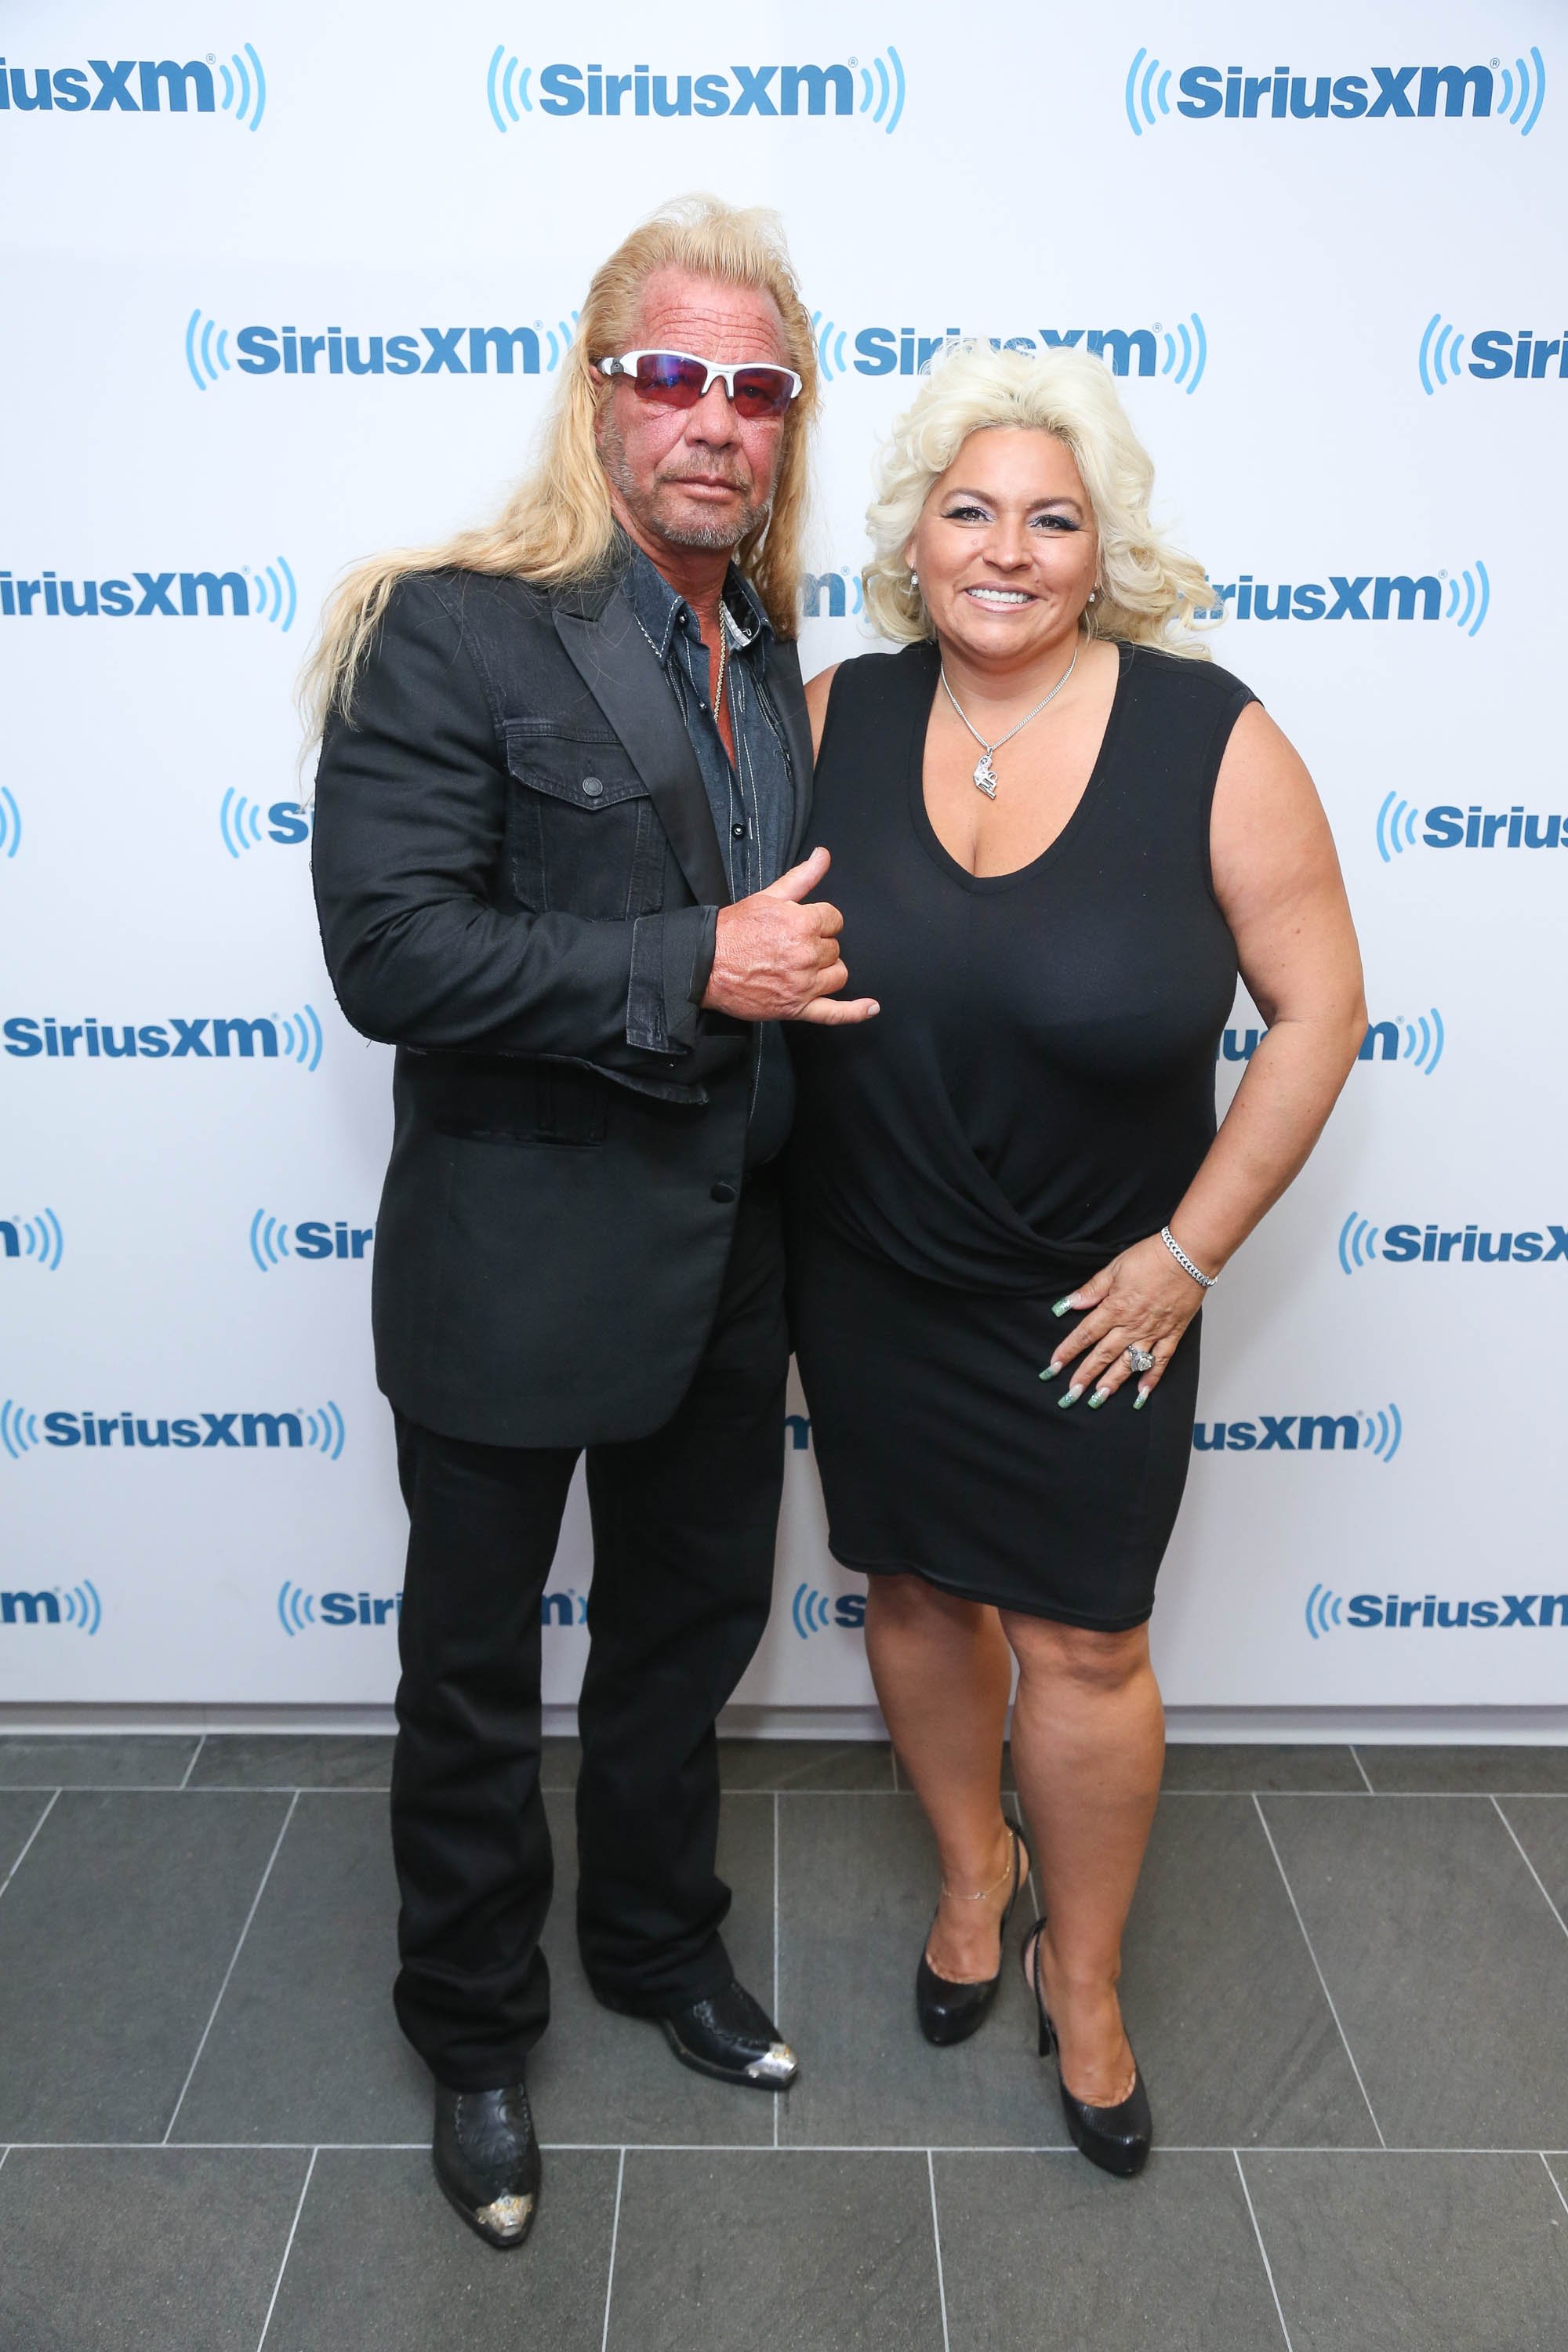 Duane Chapman and Beth Chapman visit SiriusXM Studios in New York City on June 9, 2014 | Photo: Getty Images